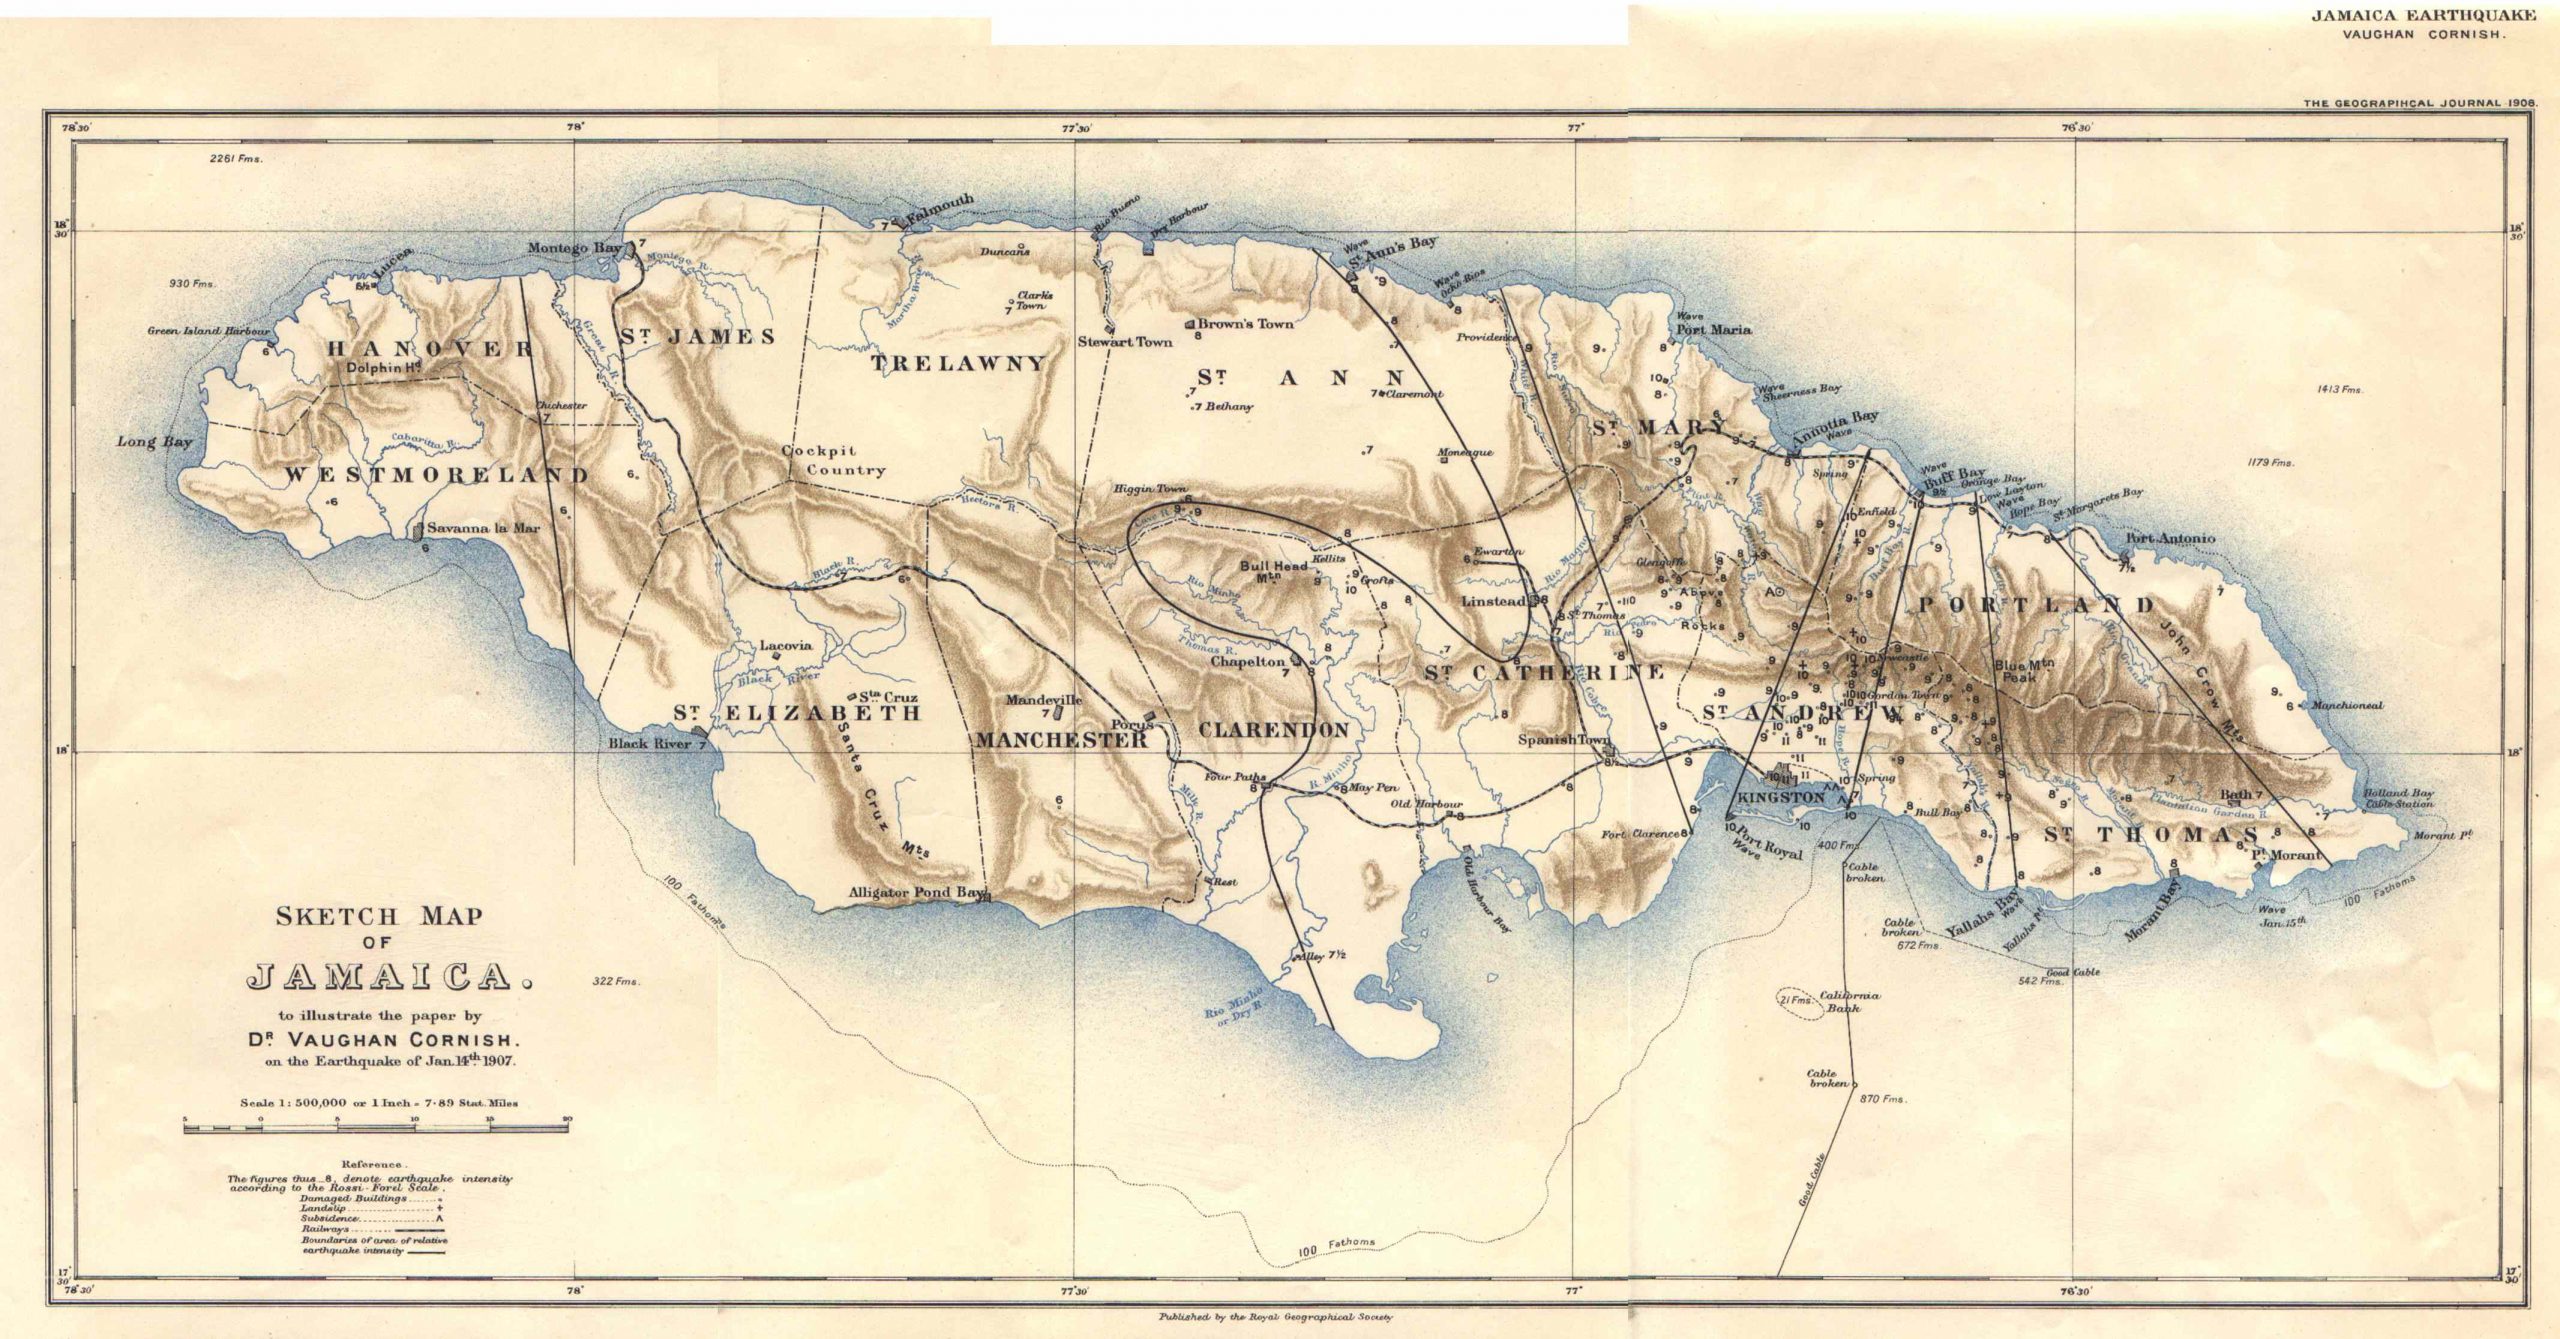 Cornish Map of Jamaica Earthquake - 1908